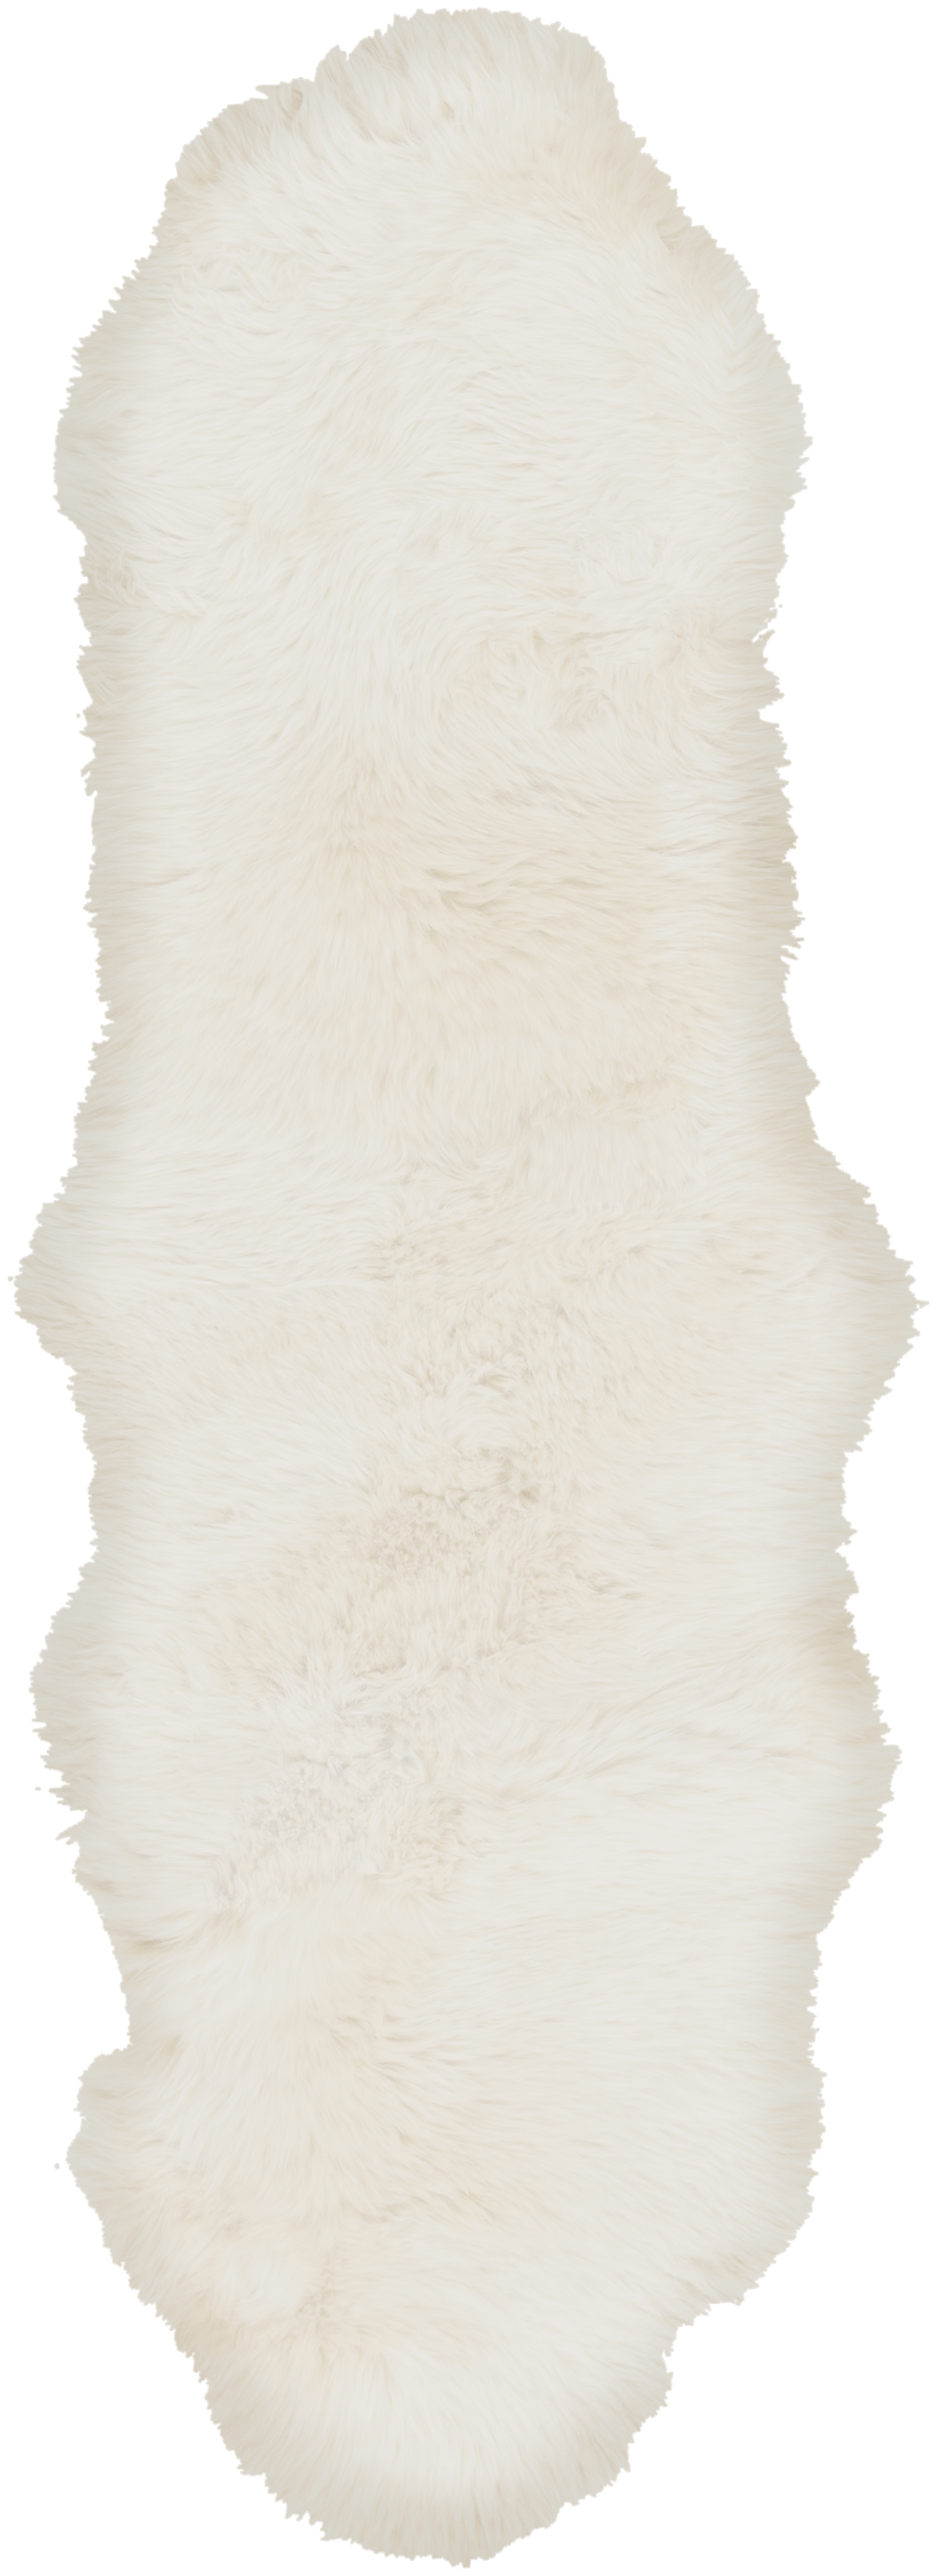 Sheepskin Runner Rug, Ivory, 2' x 6' - Image 0